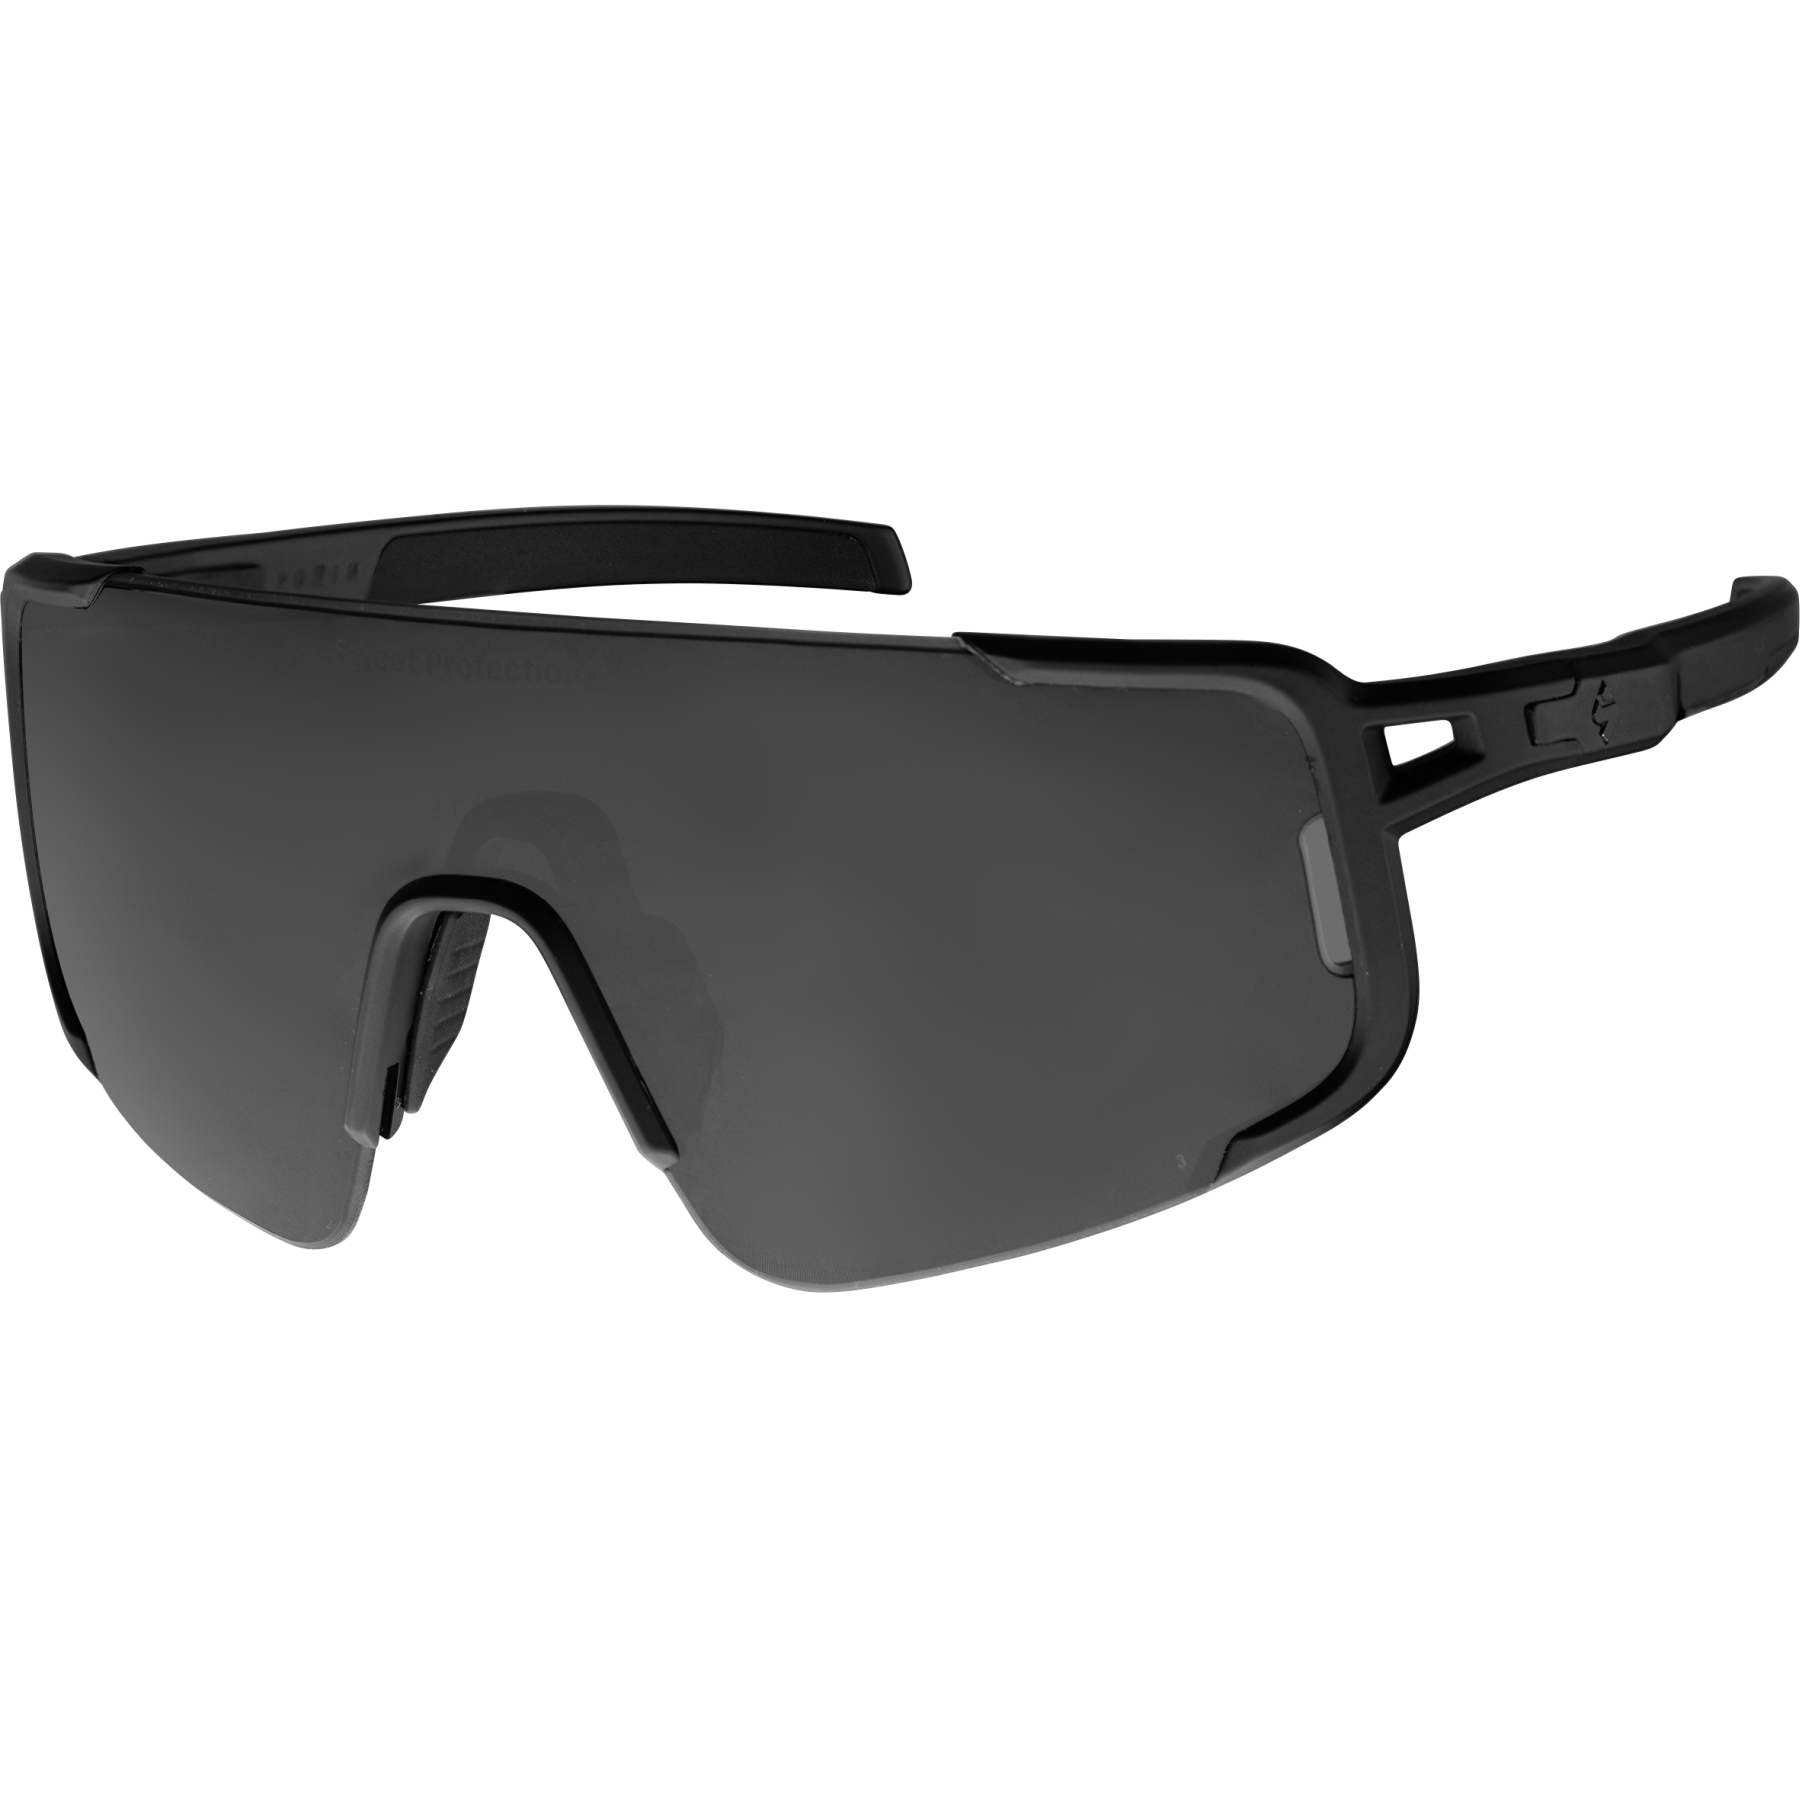 Produktbild von SWEET Protection Ronin Polarized Brille - Obsidian Black Polarized/Matte Black